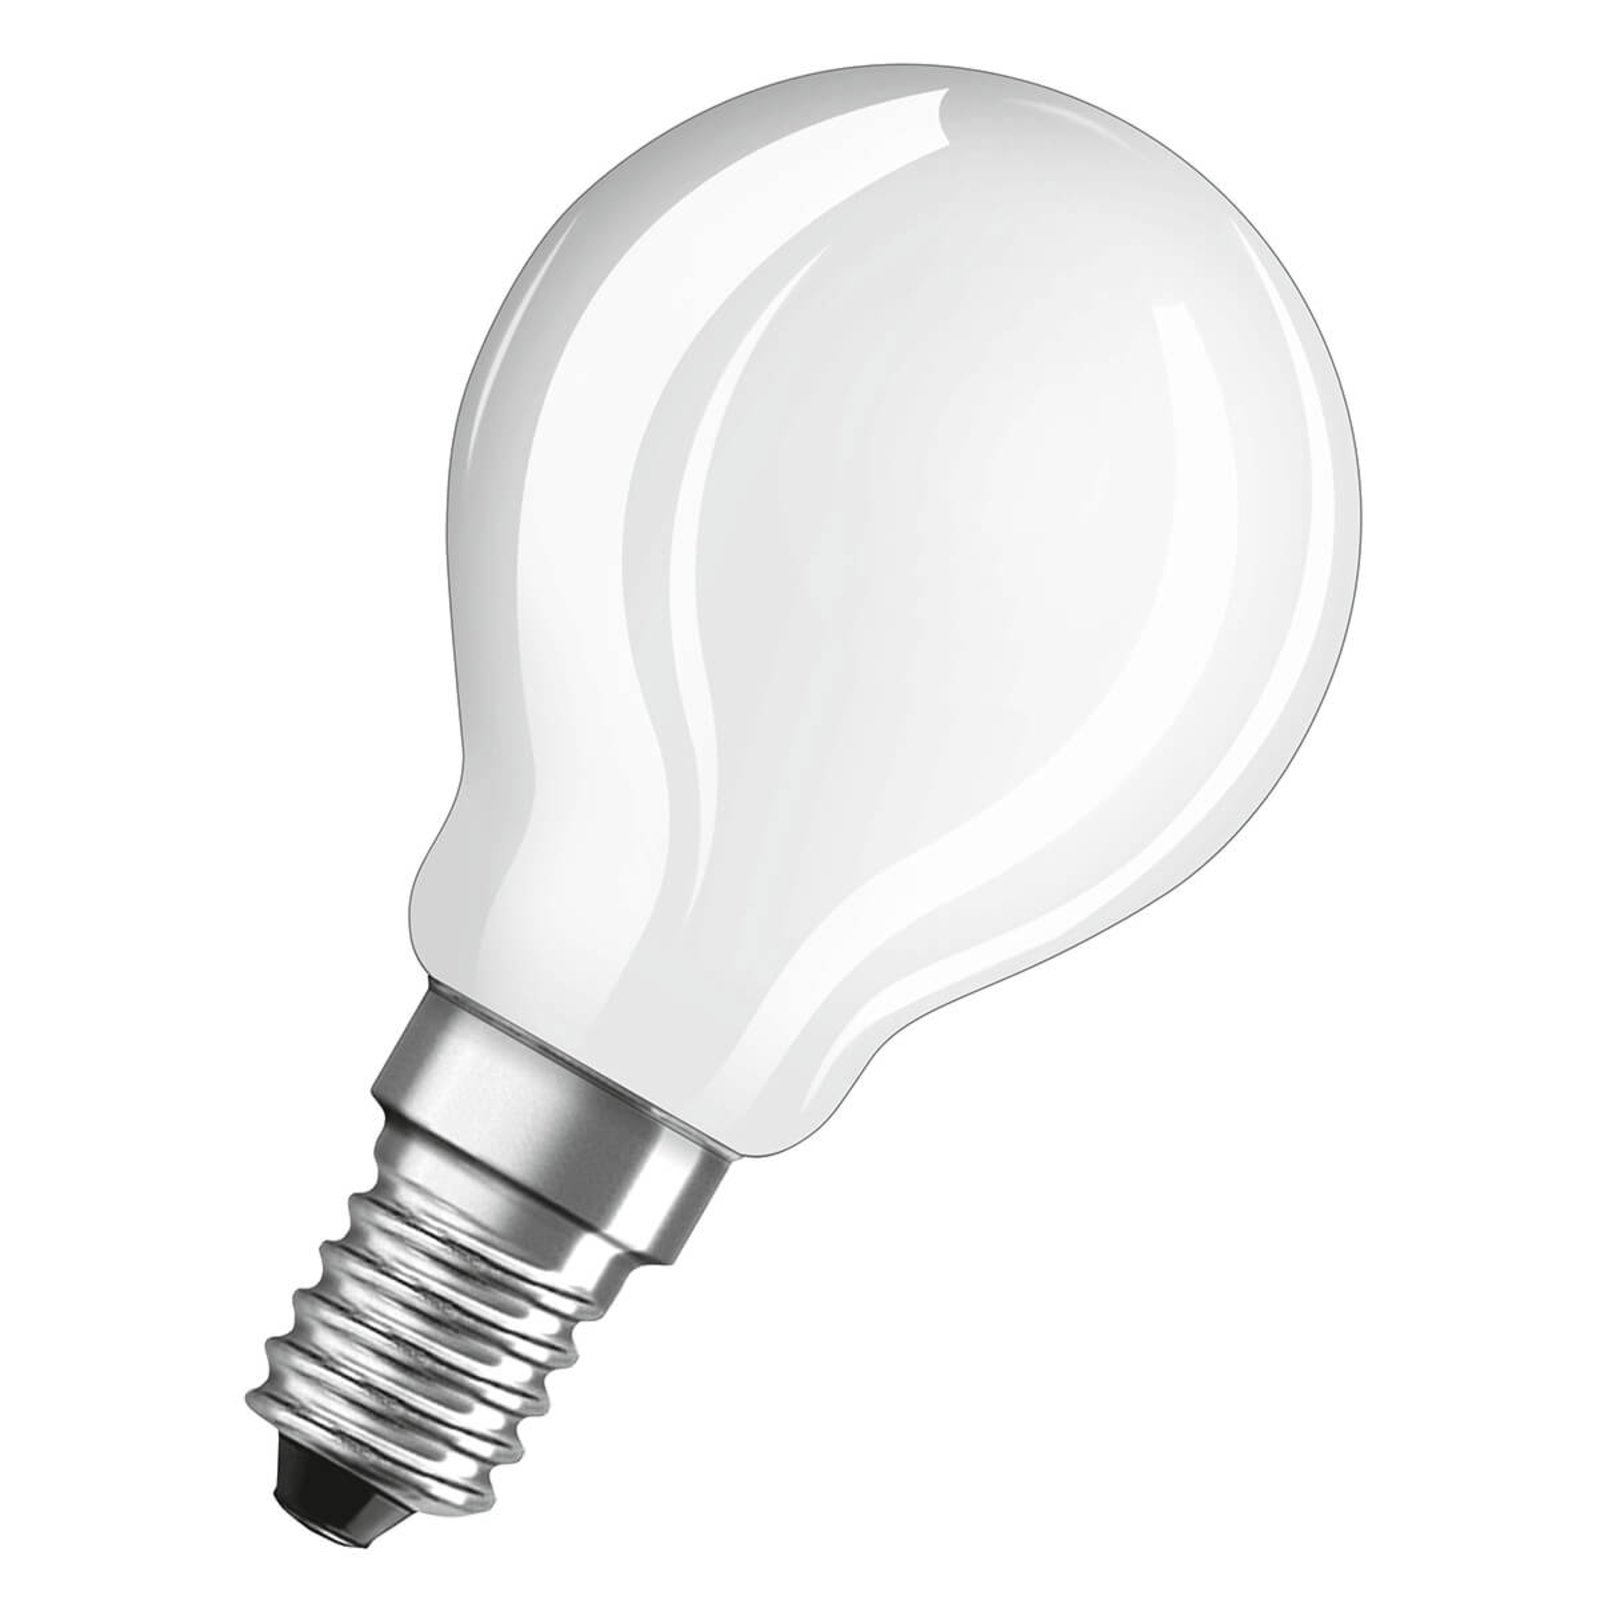 LED lempa E14 4W, šiltai balta, 470 liumenų, 3 vnt